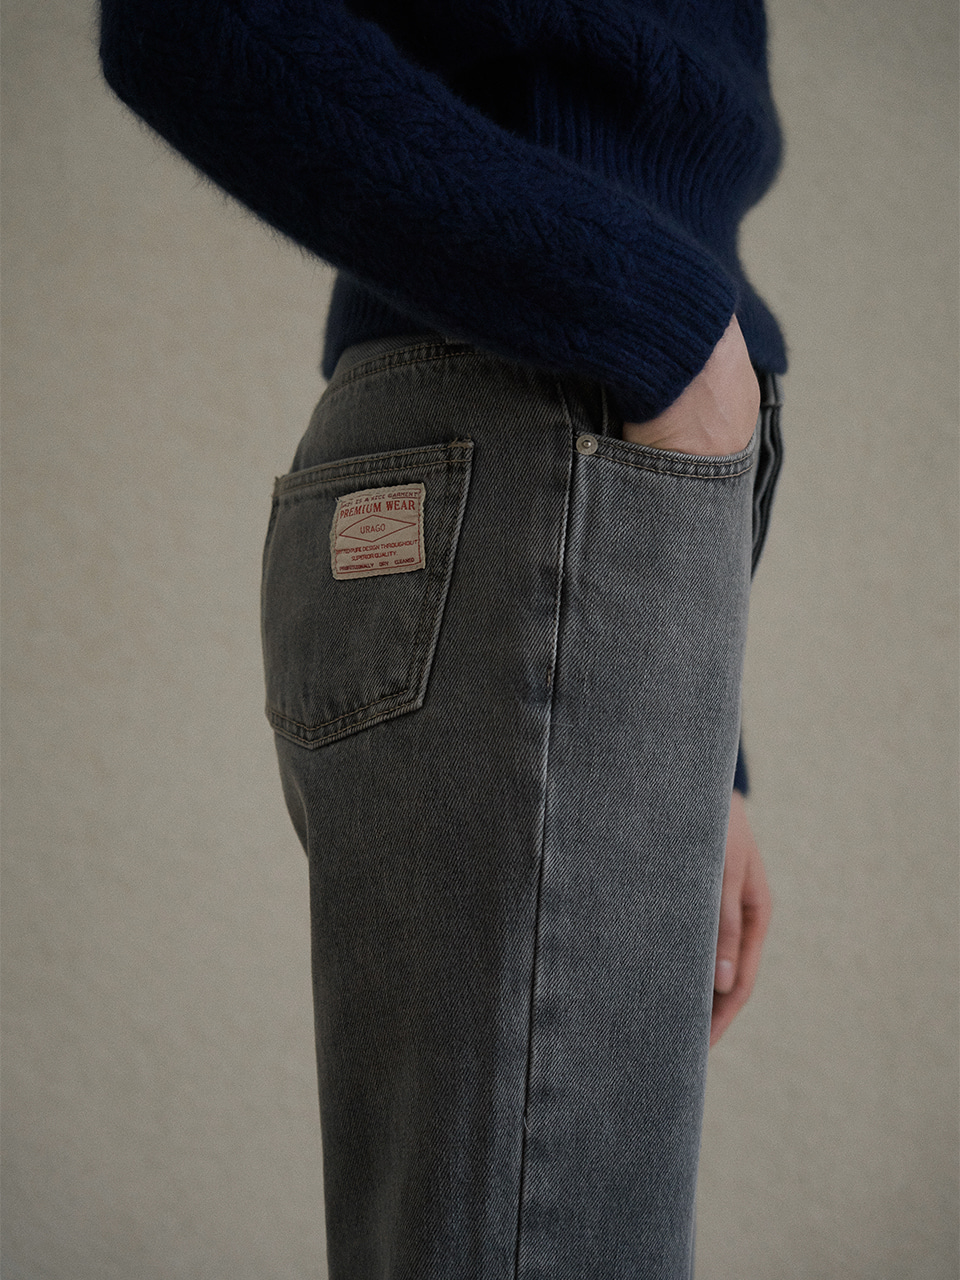 URAGO [REFURB]Vintage garment denim pants